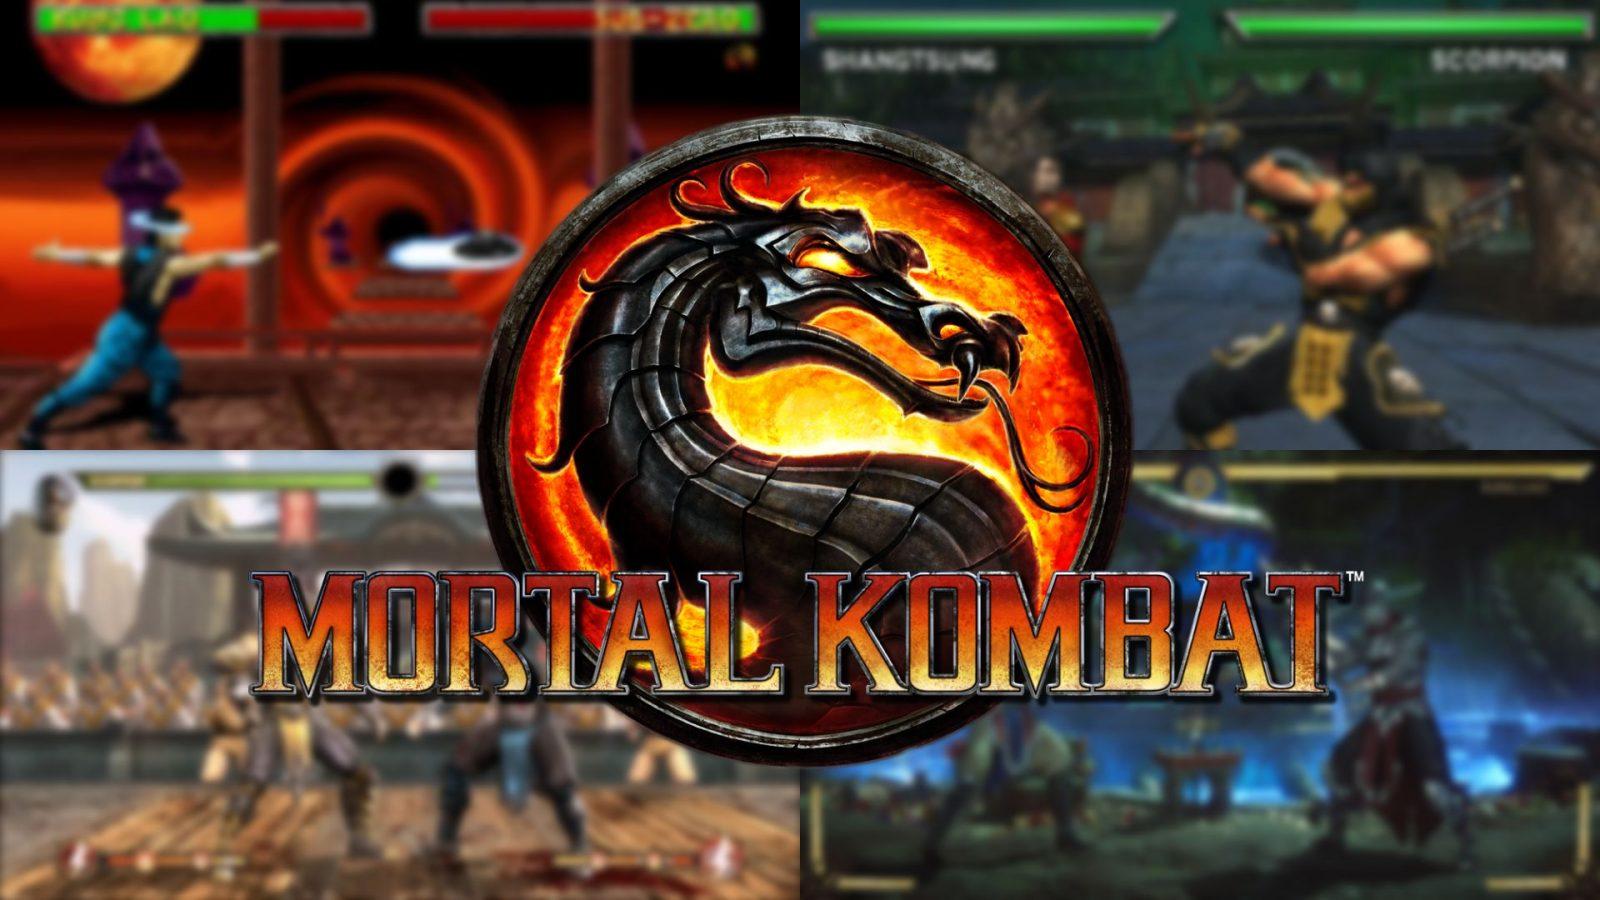 Is MK9 still active on PC or PS3? : r/MortalKombat